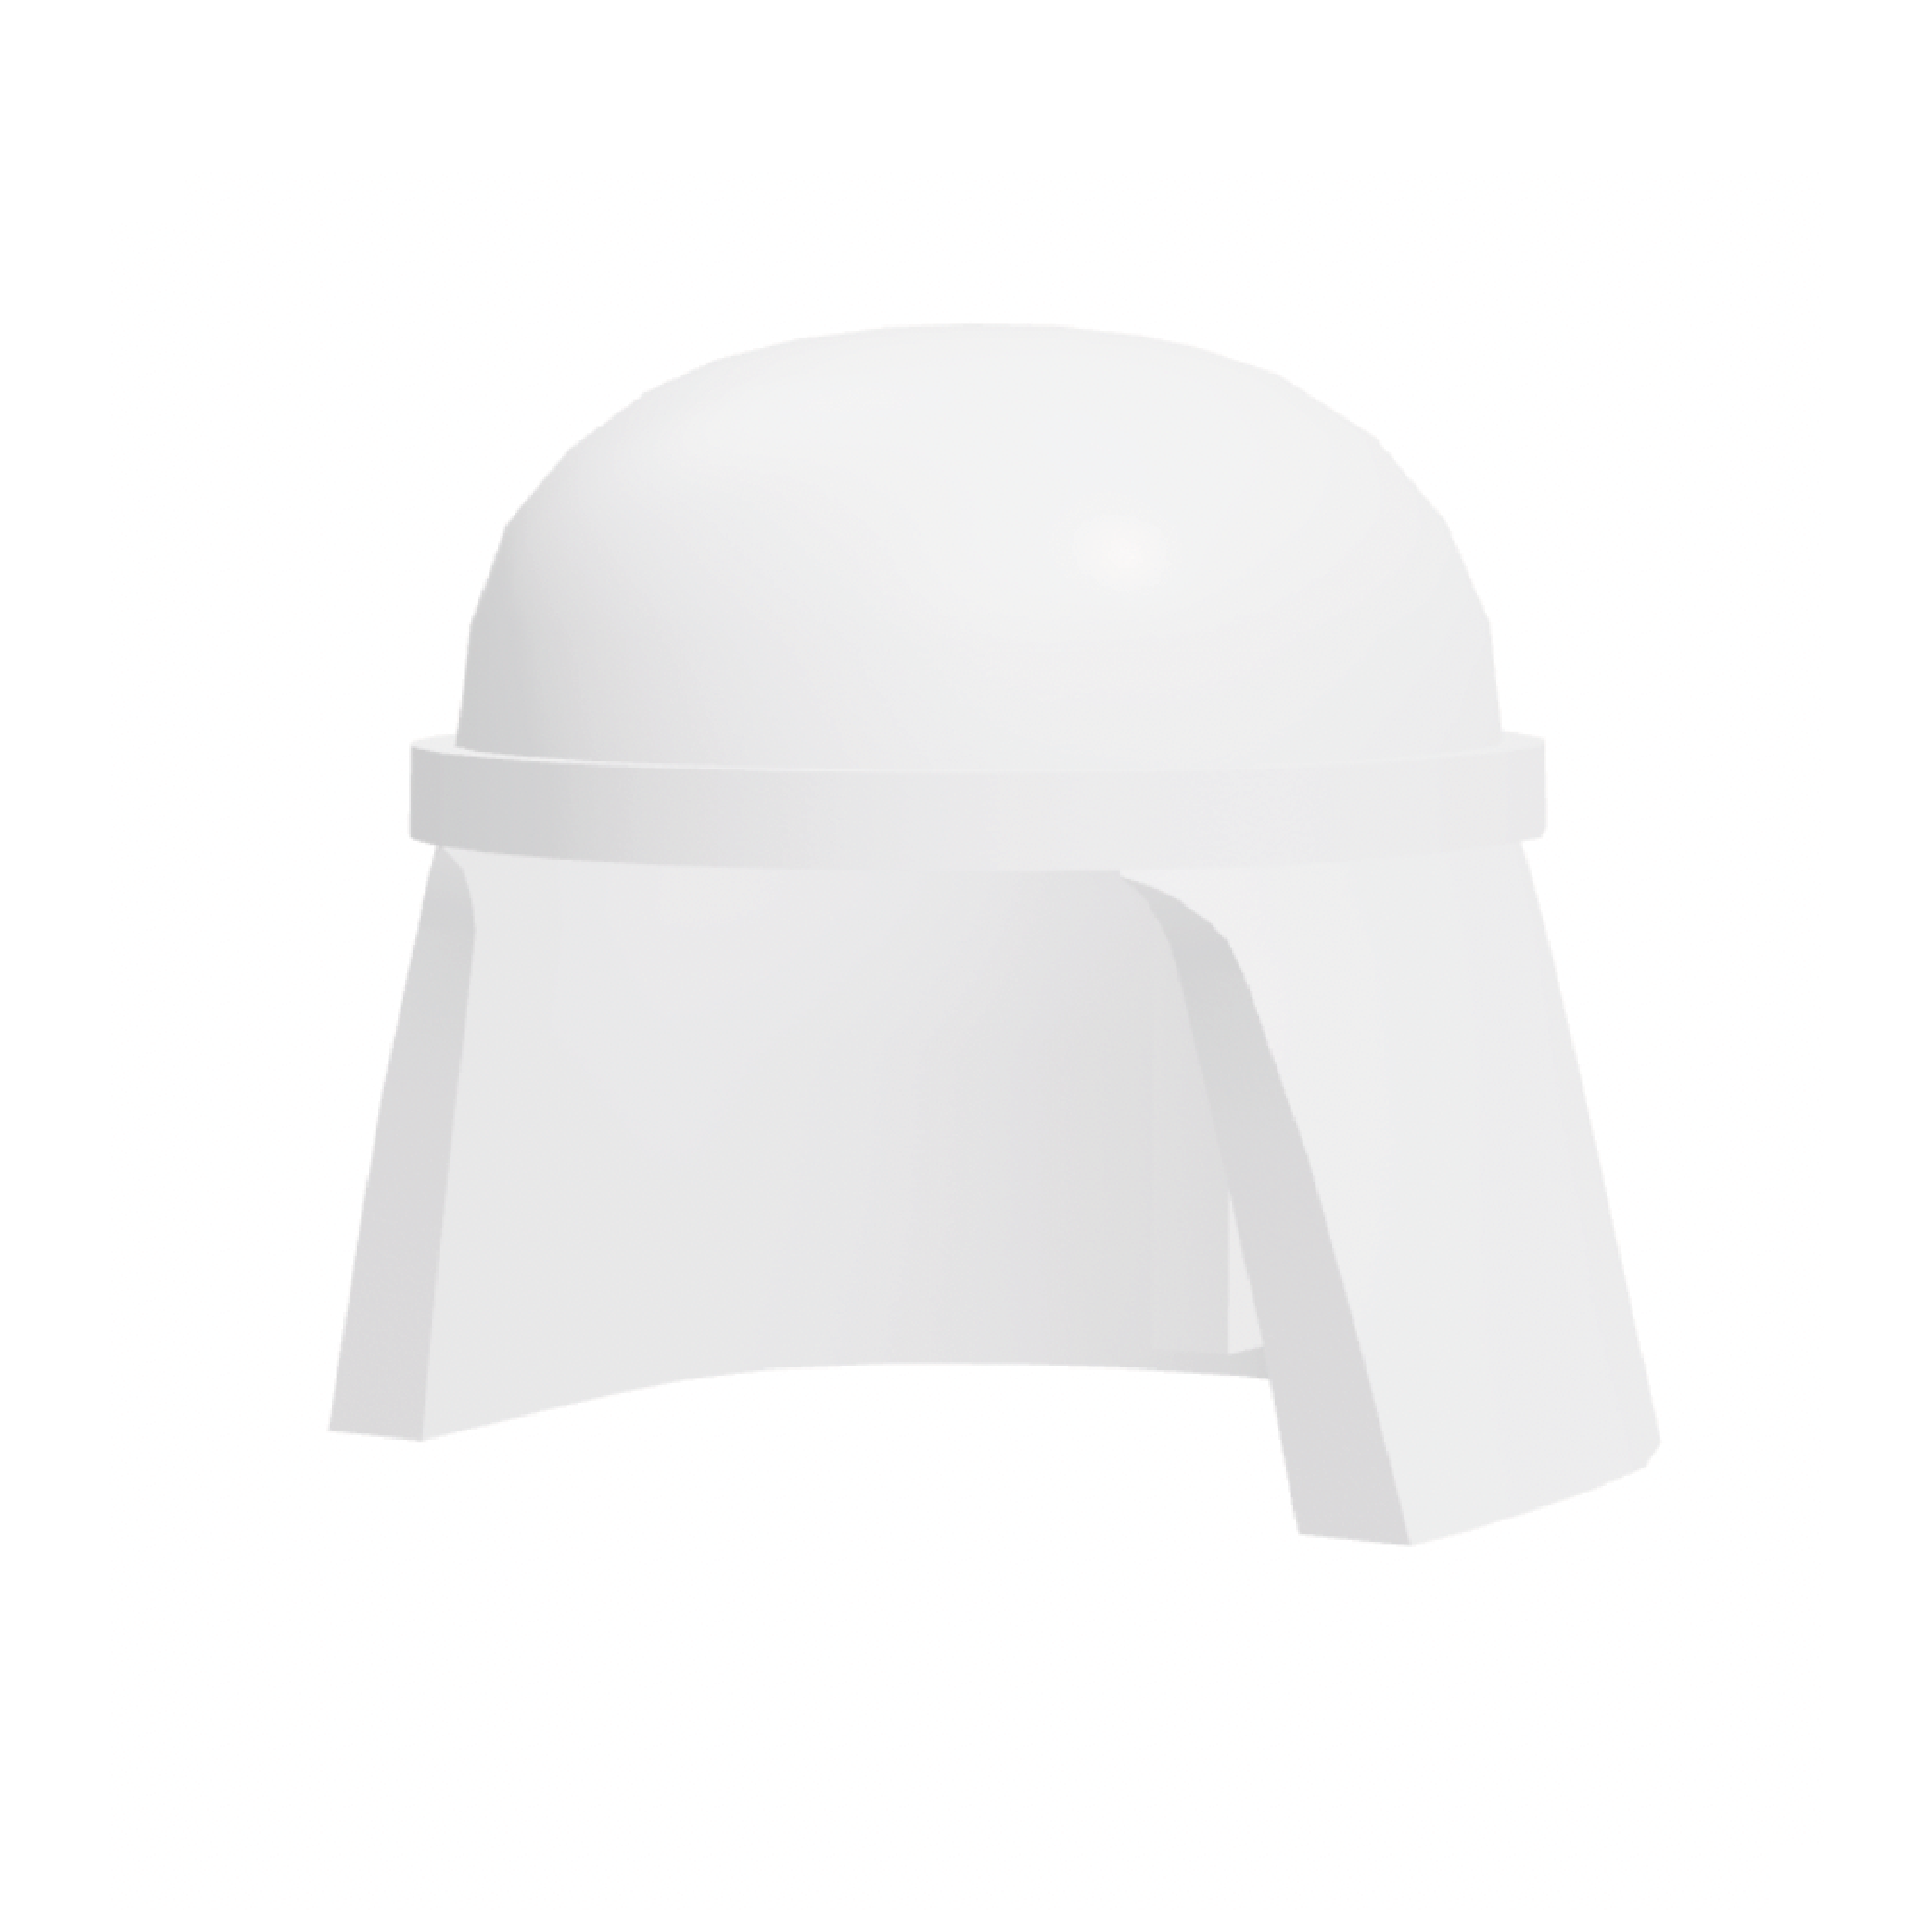 LEGO® Star Wars Helmet Imperial Pilot